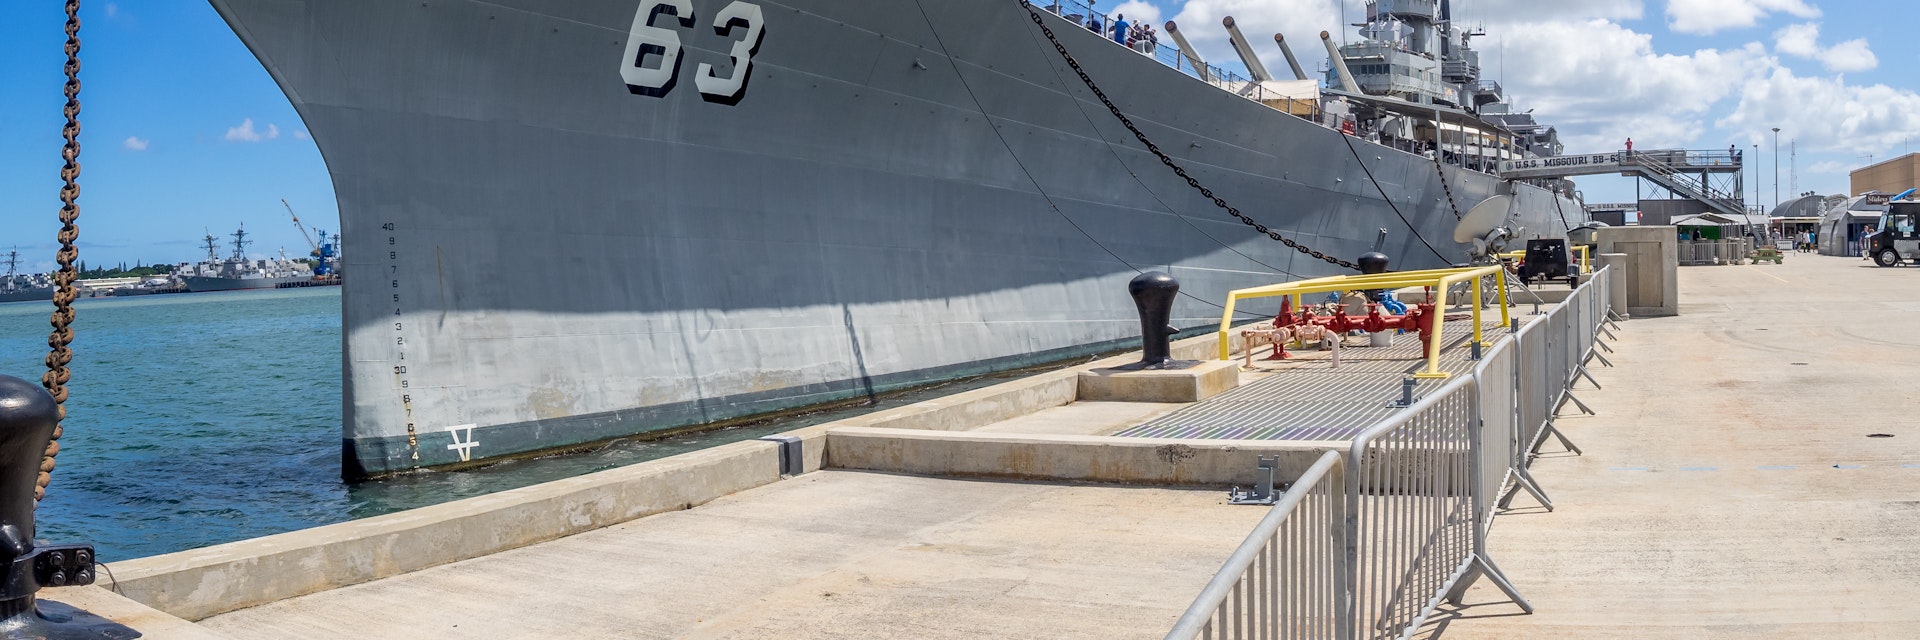 The USS Missouri battleship in Pearl Harbor.